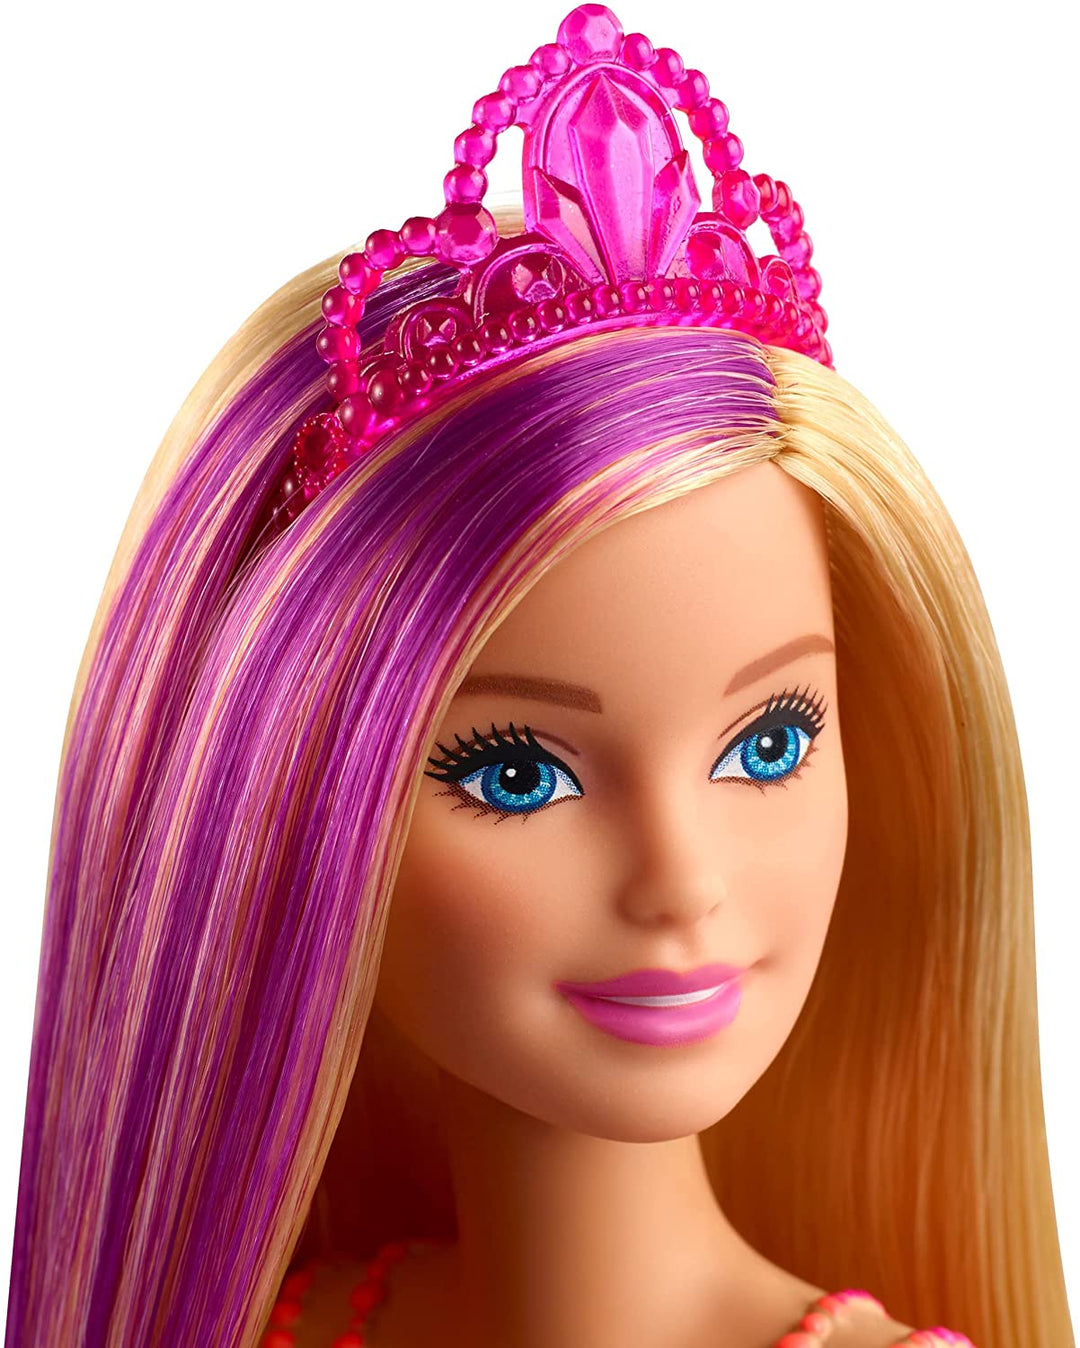 Barbie GJK13 Dreamtopia Prinzessinnenpuppe